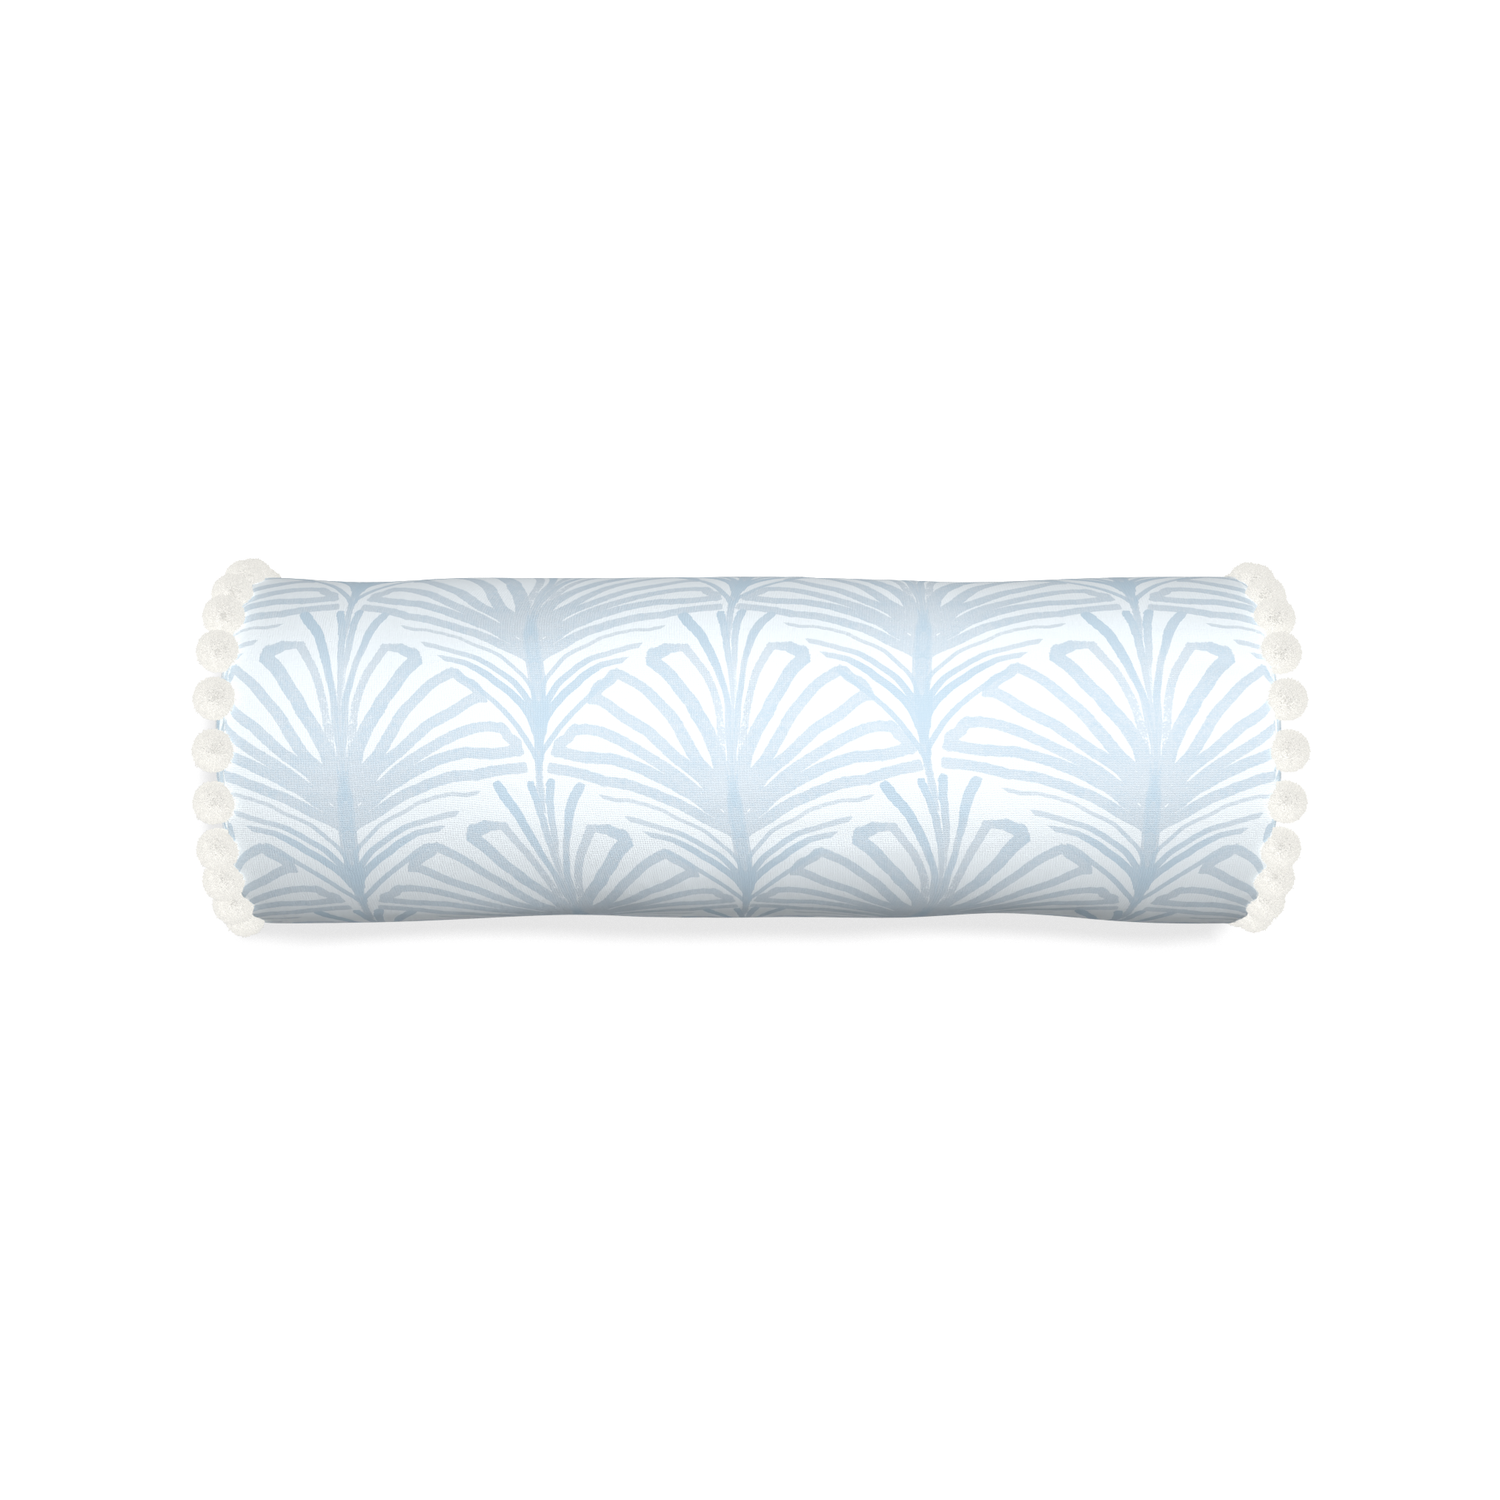 Bolster suzy sky custom pillow with snow pom pom on white background